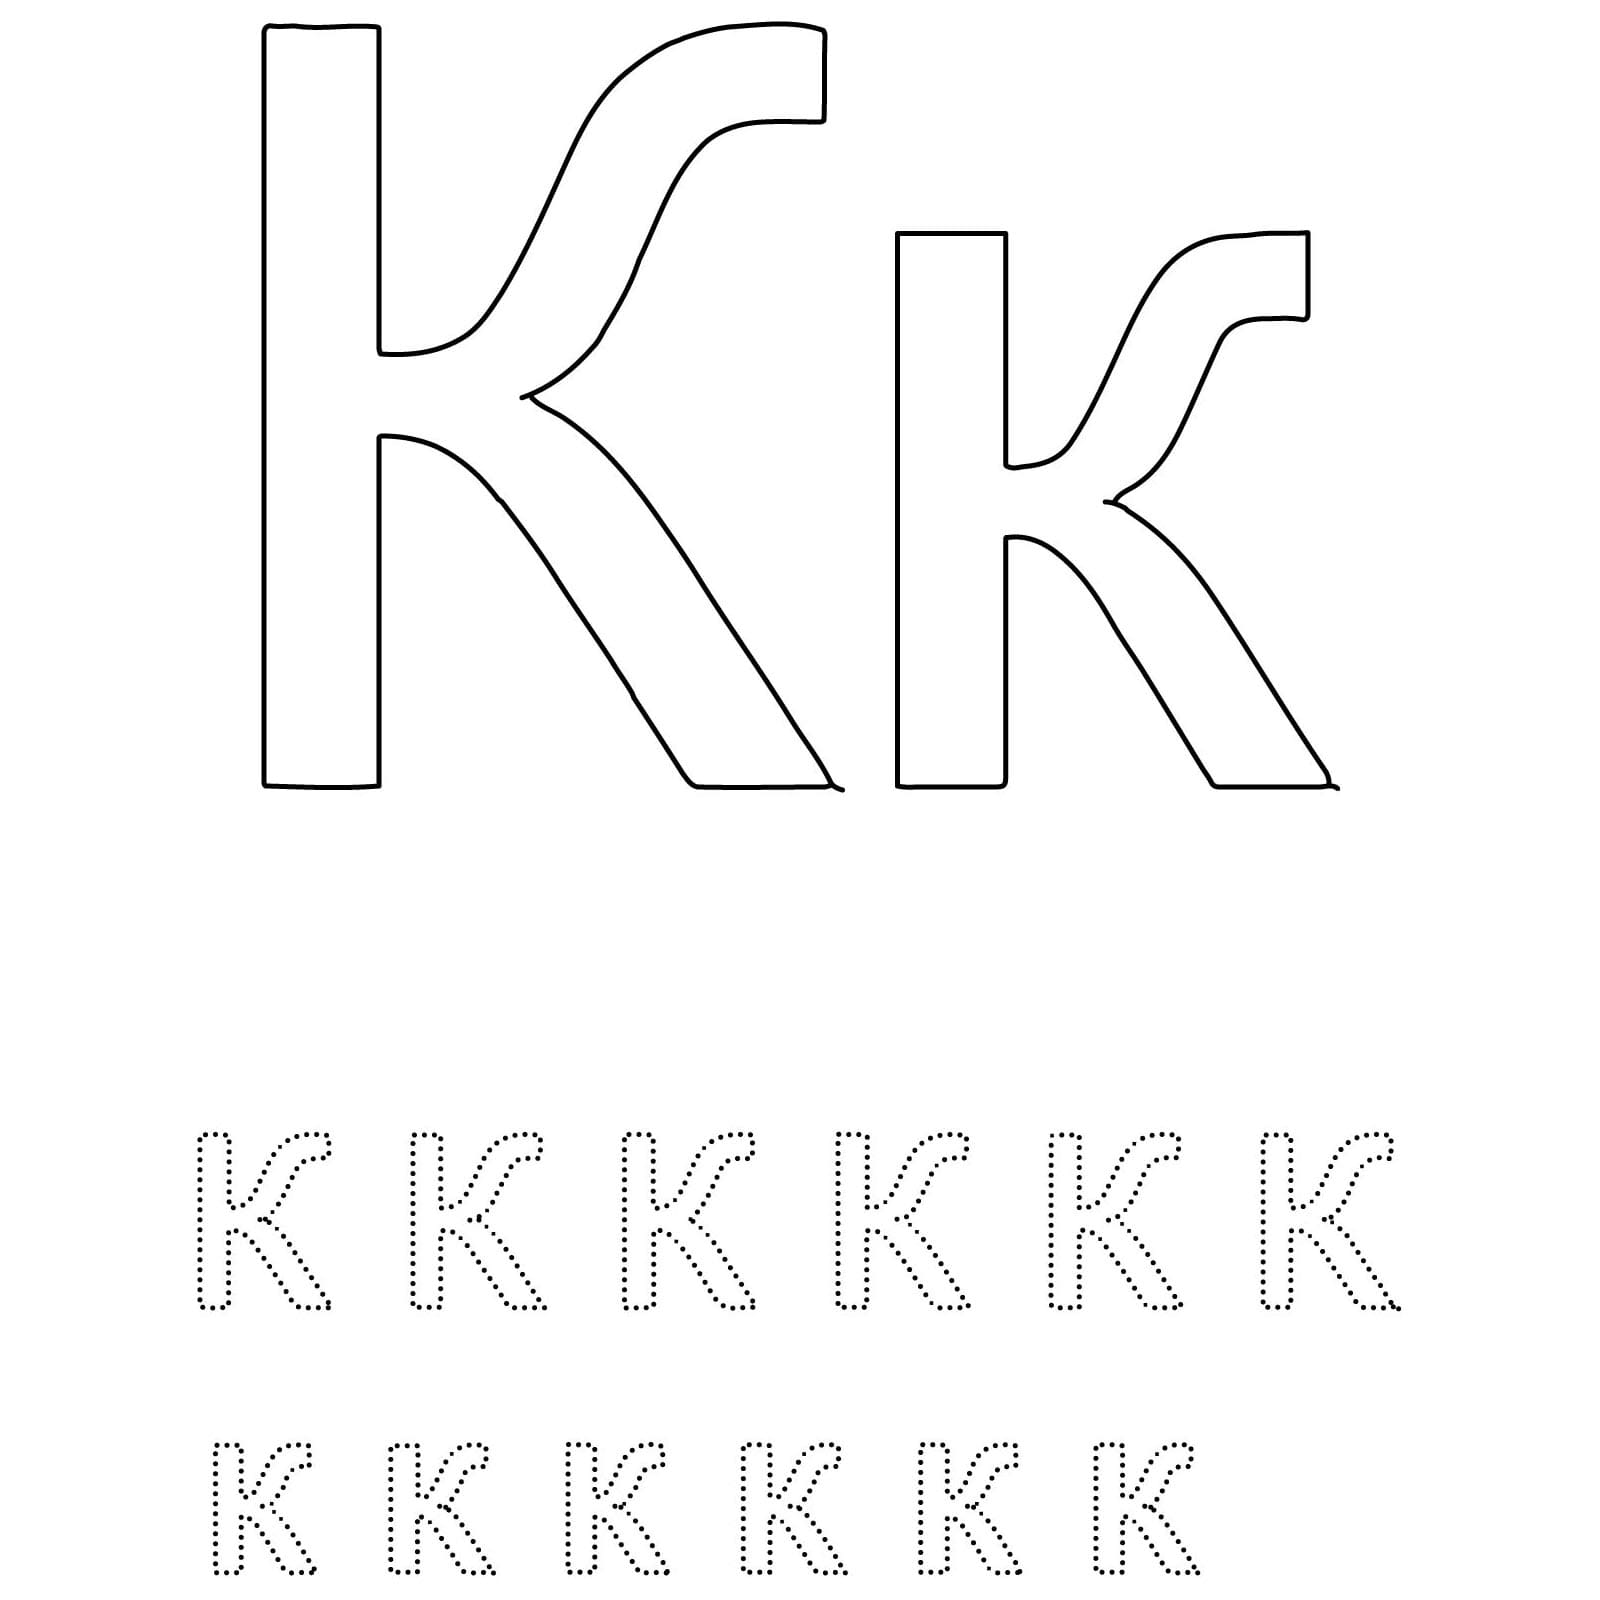 Letter K Tracing Worksheet coloring page - Download, Print or Color ...